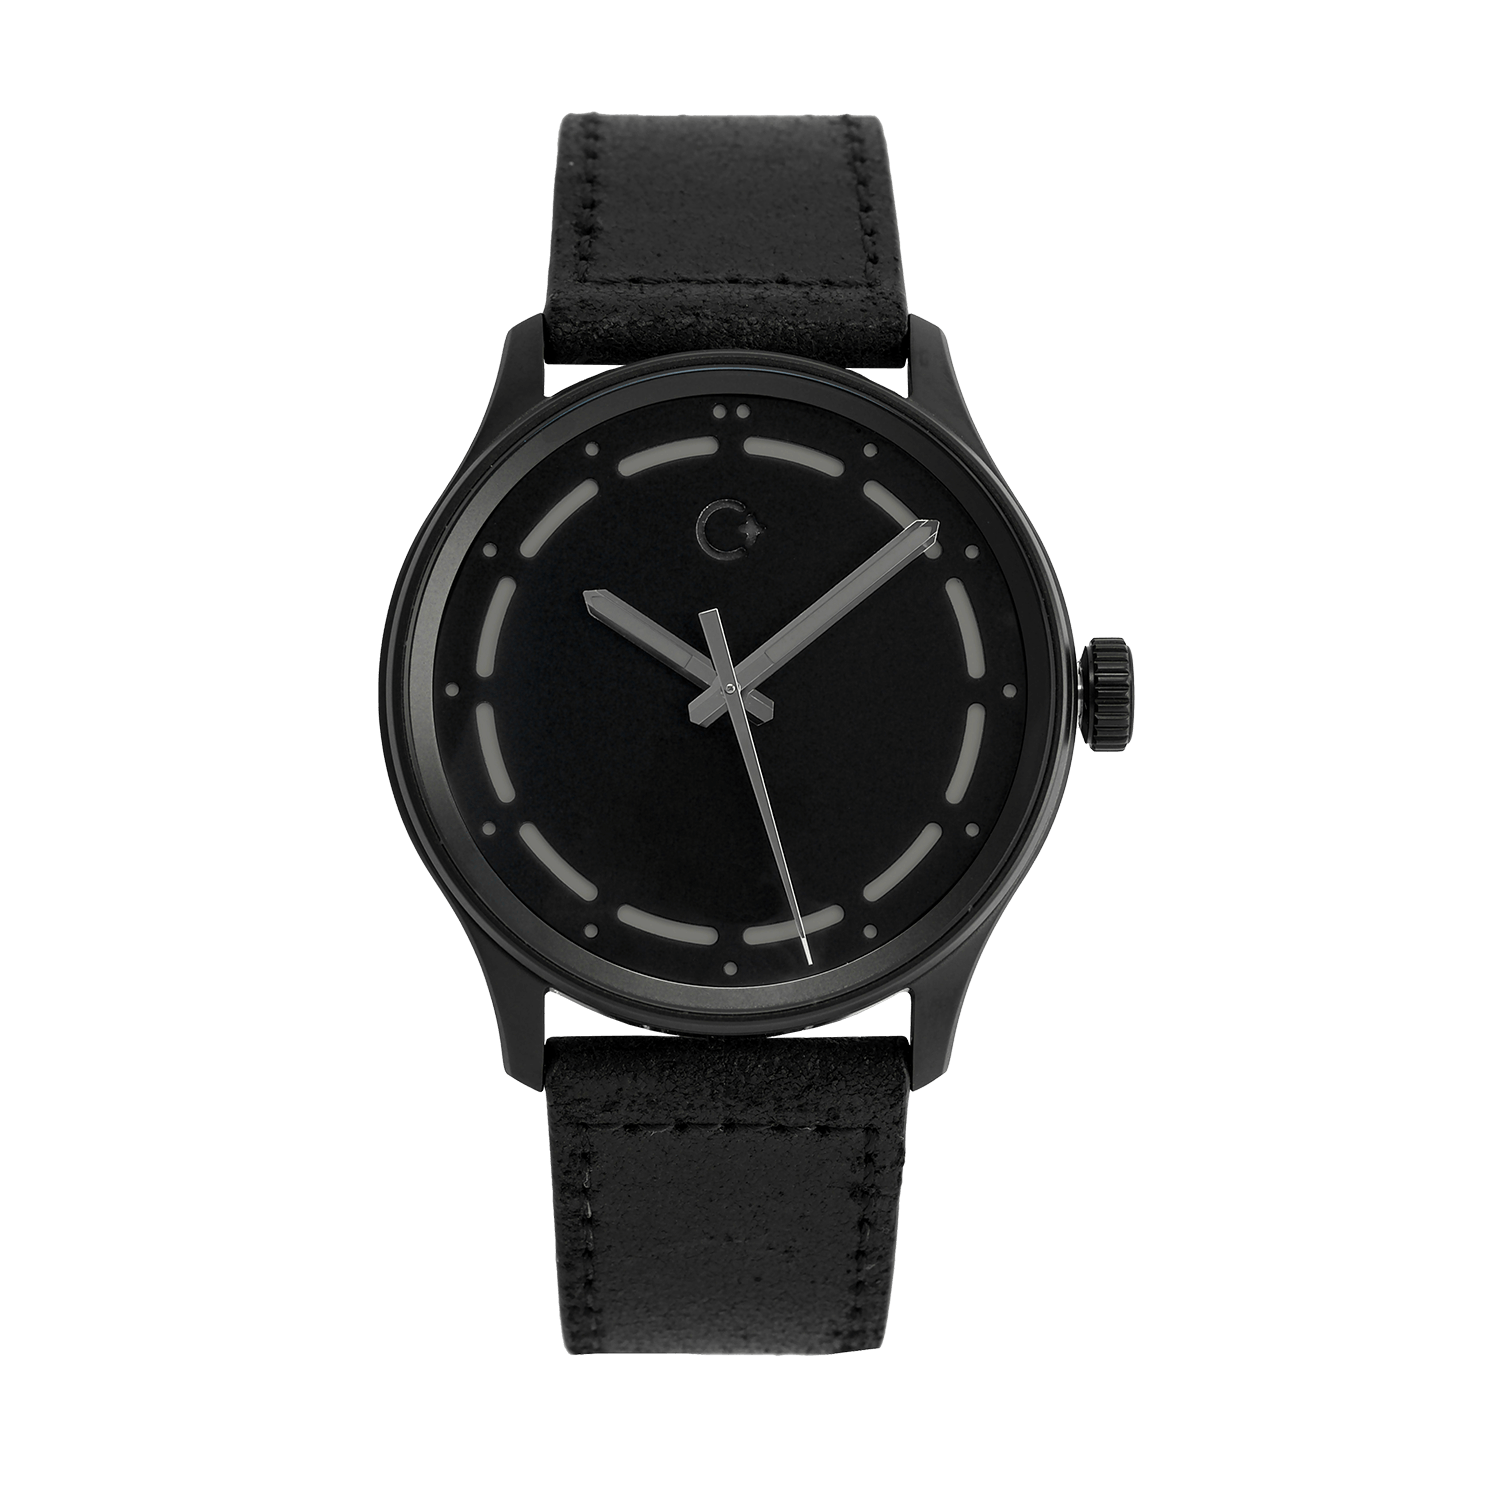 All Black NanoBlack hodinky s černým koženým páskem, 100m vodotěsnost, Sellita SW200-1 strojekt, Chronotechna